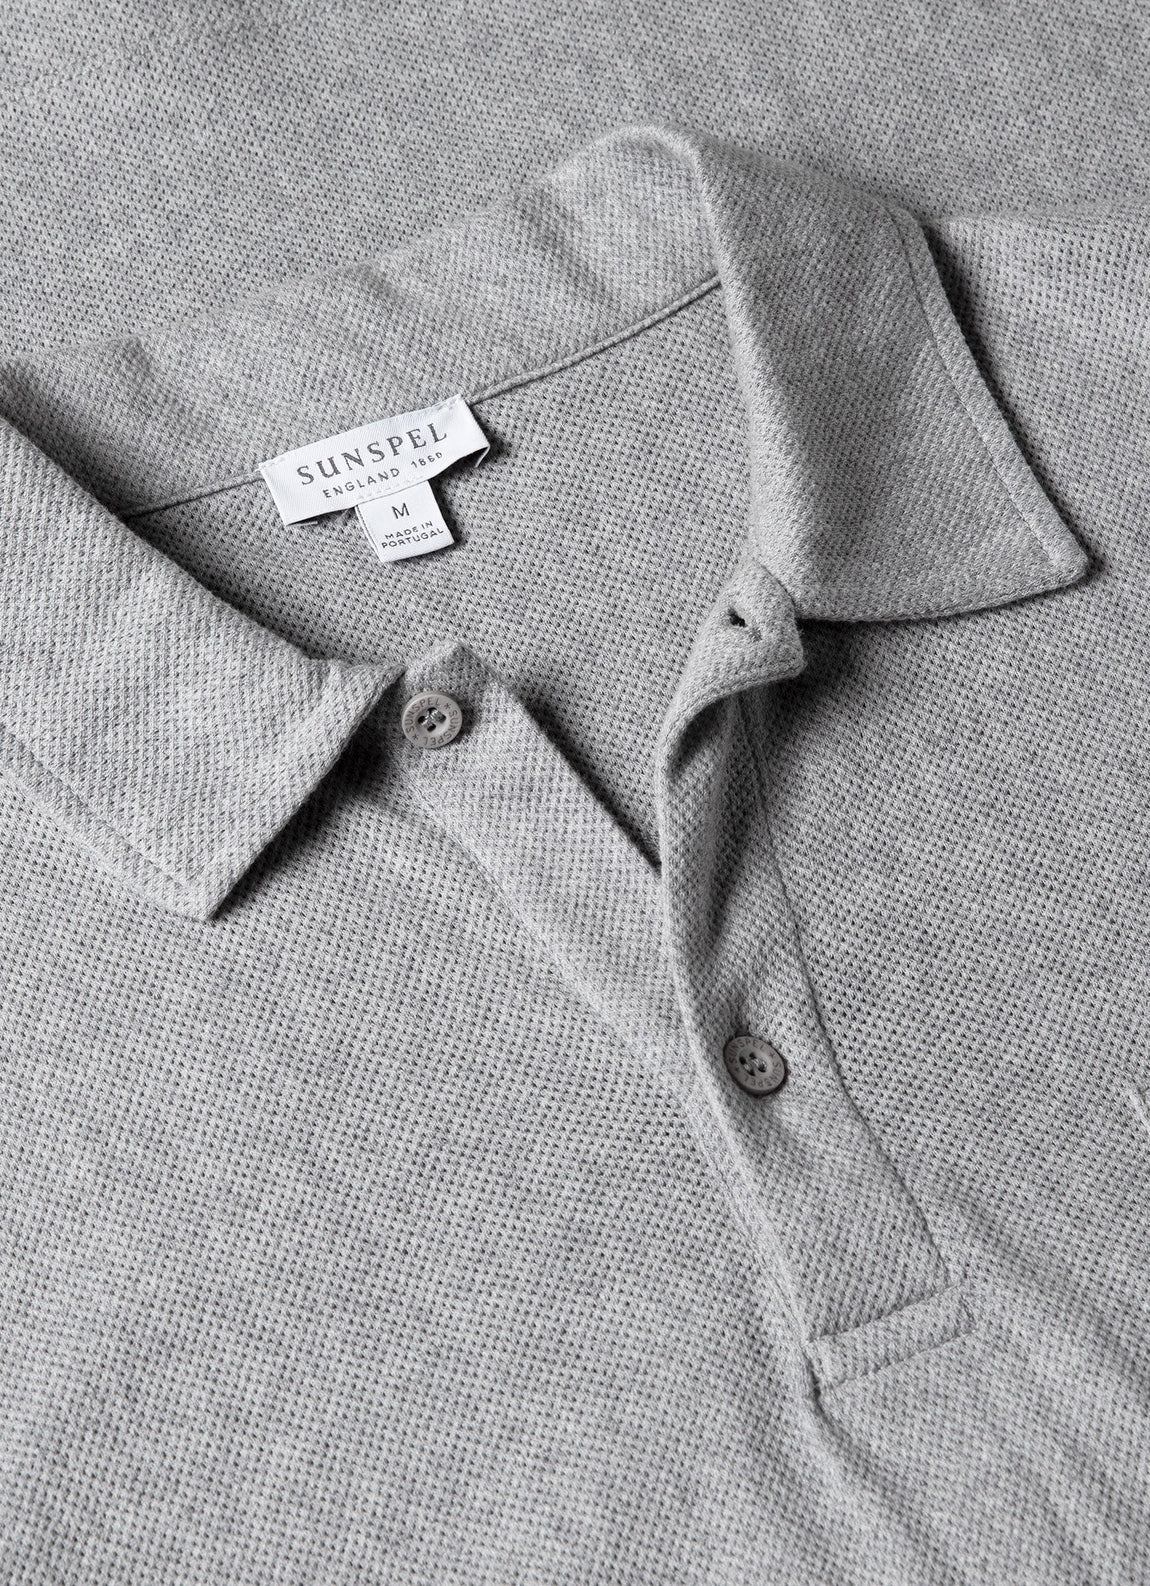 Men's Riviera Polo Shirt in Grey Melange